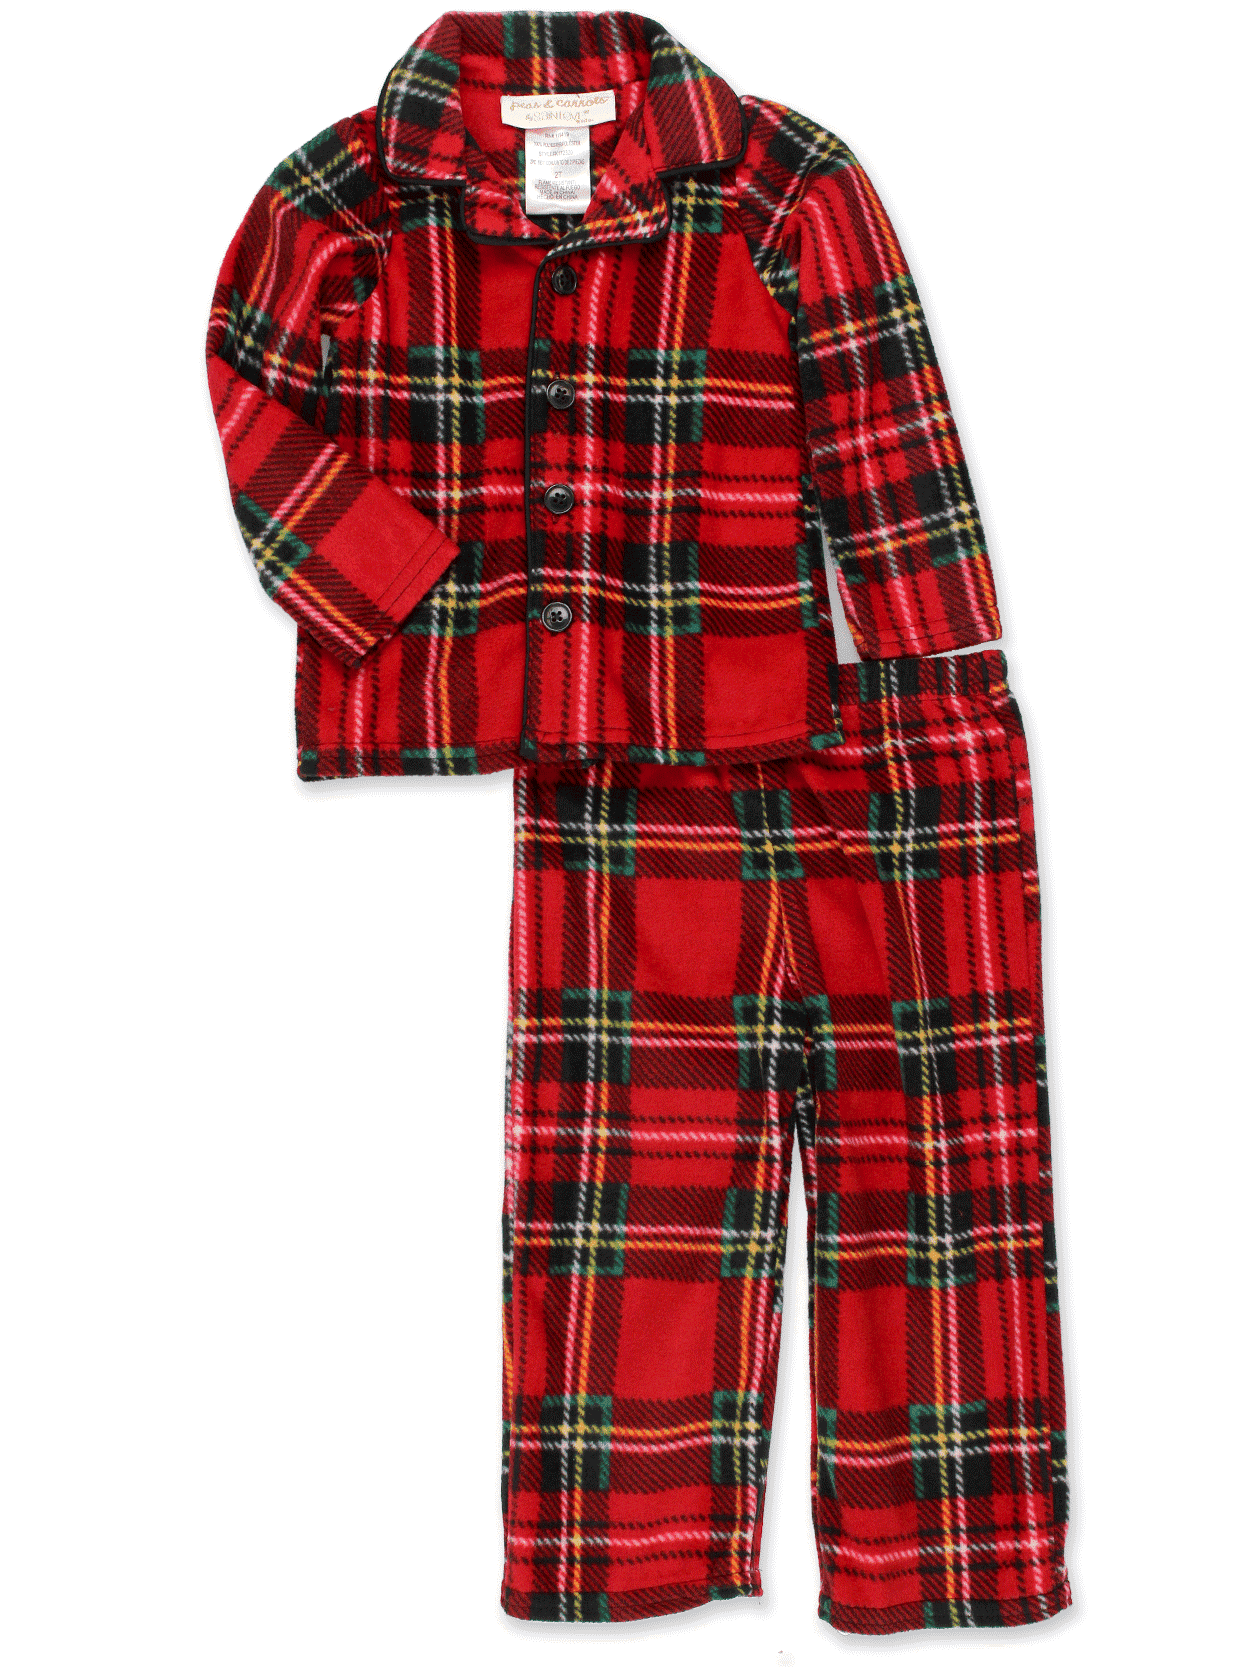 Komar Kids Boys Traditional Holiday Christmas Plaid Coat Style Pajamas Set 